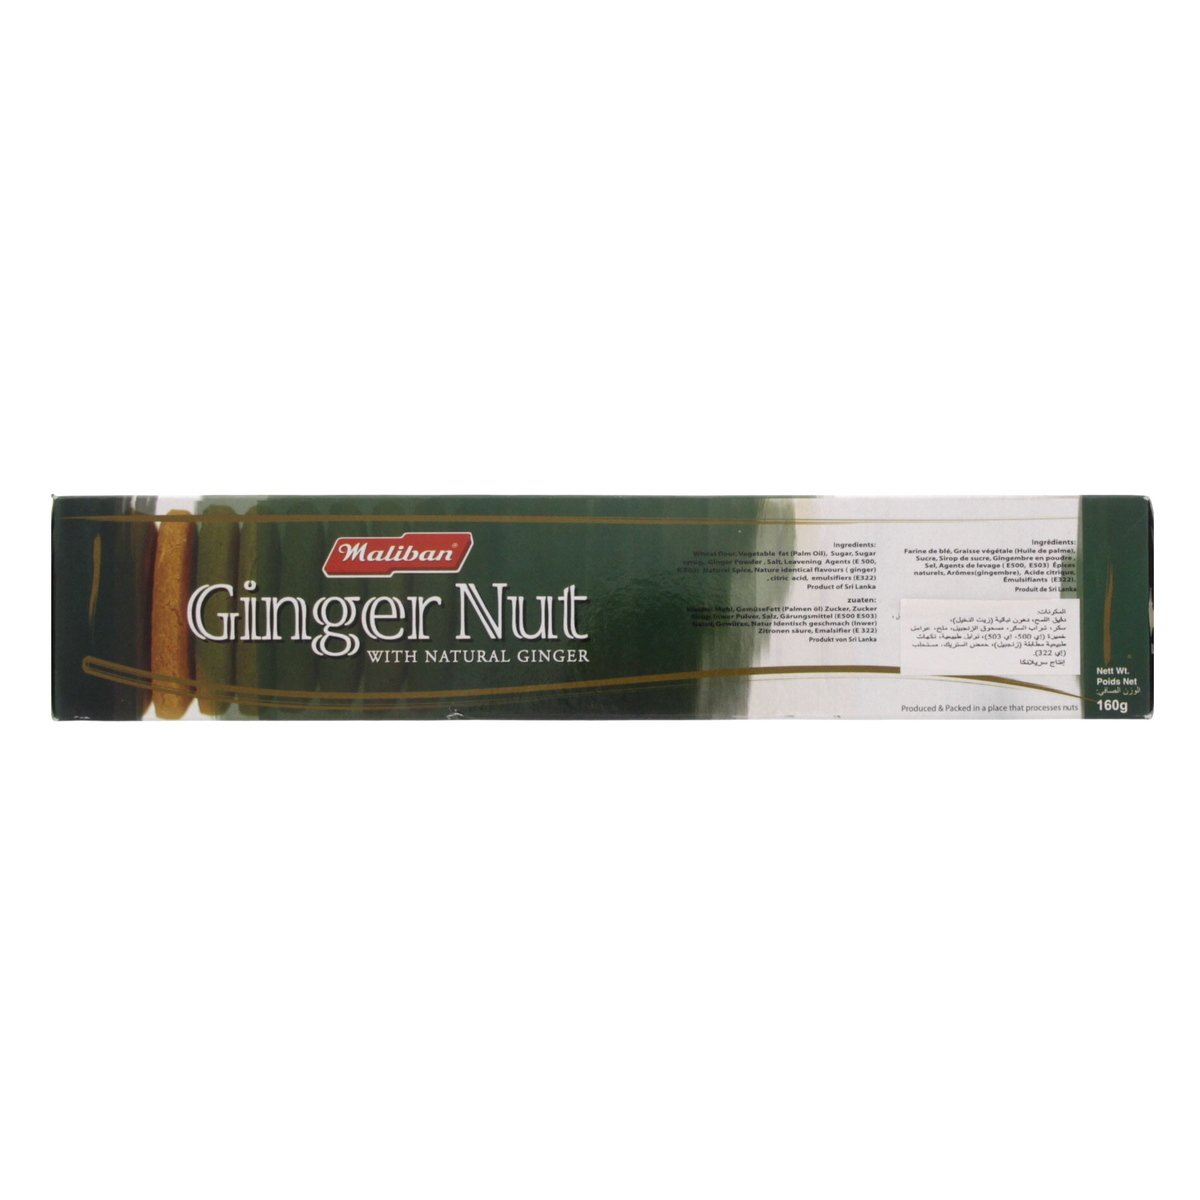 Maliban Ginger Nut With Natural Ginger 160g